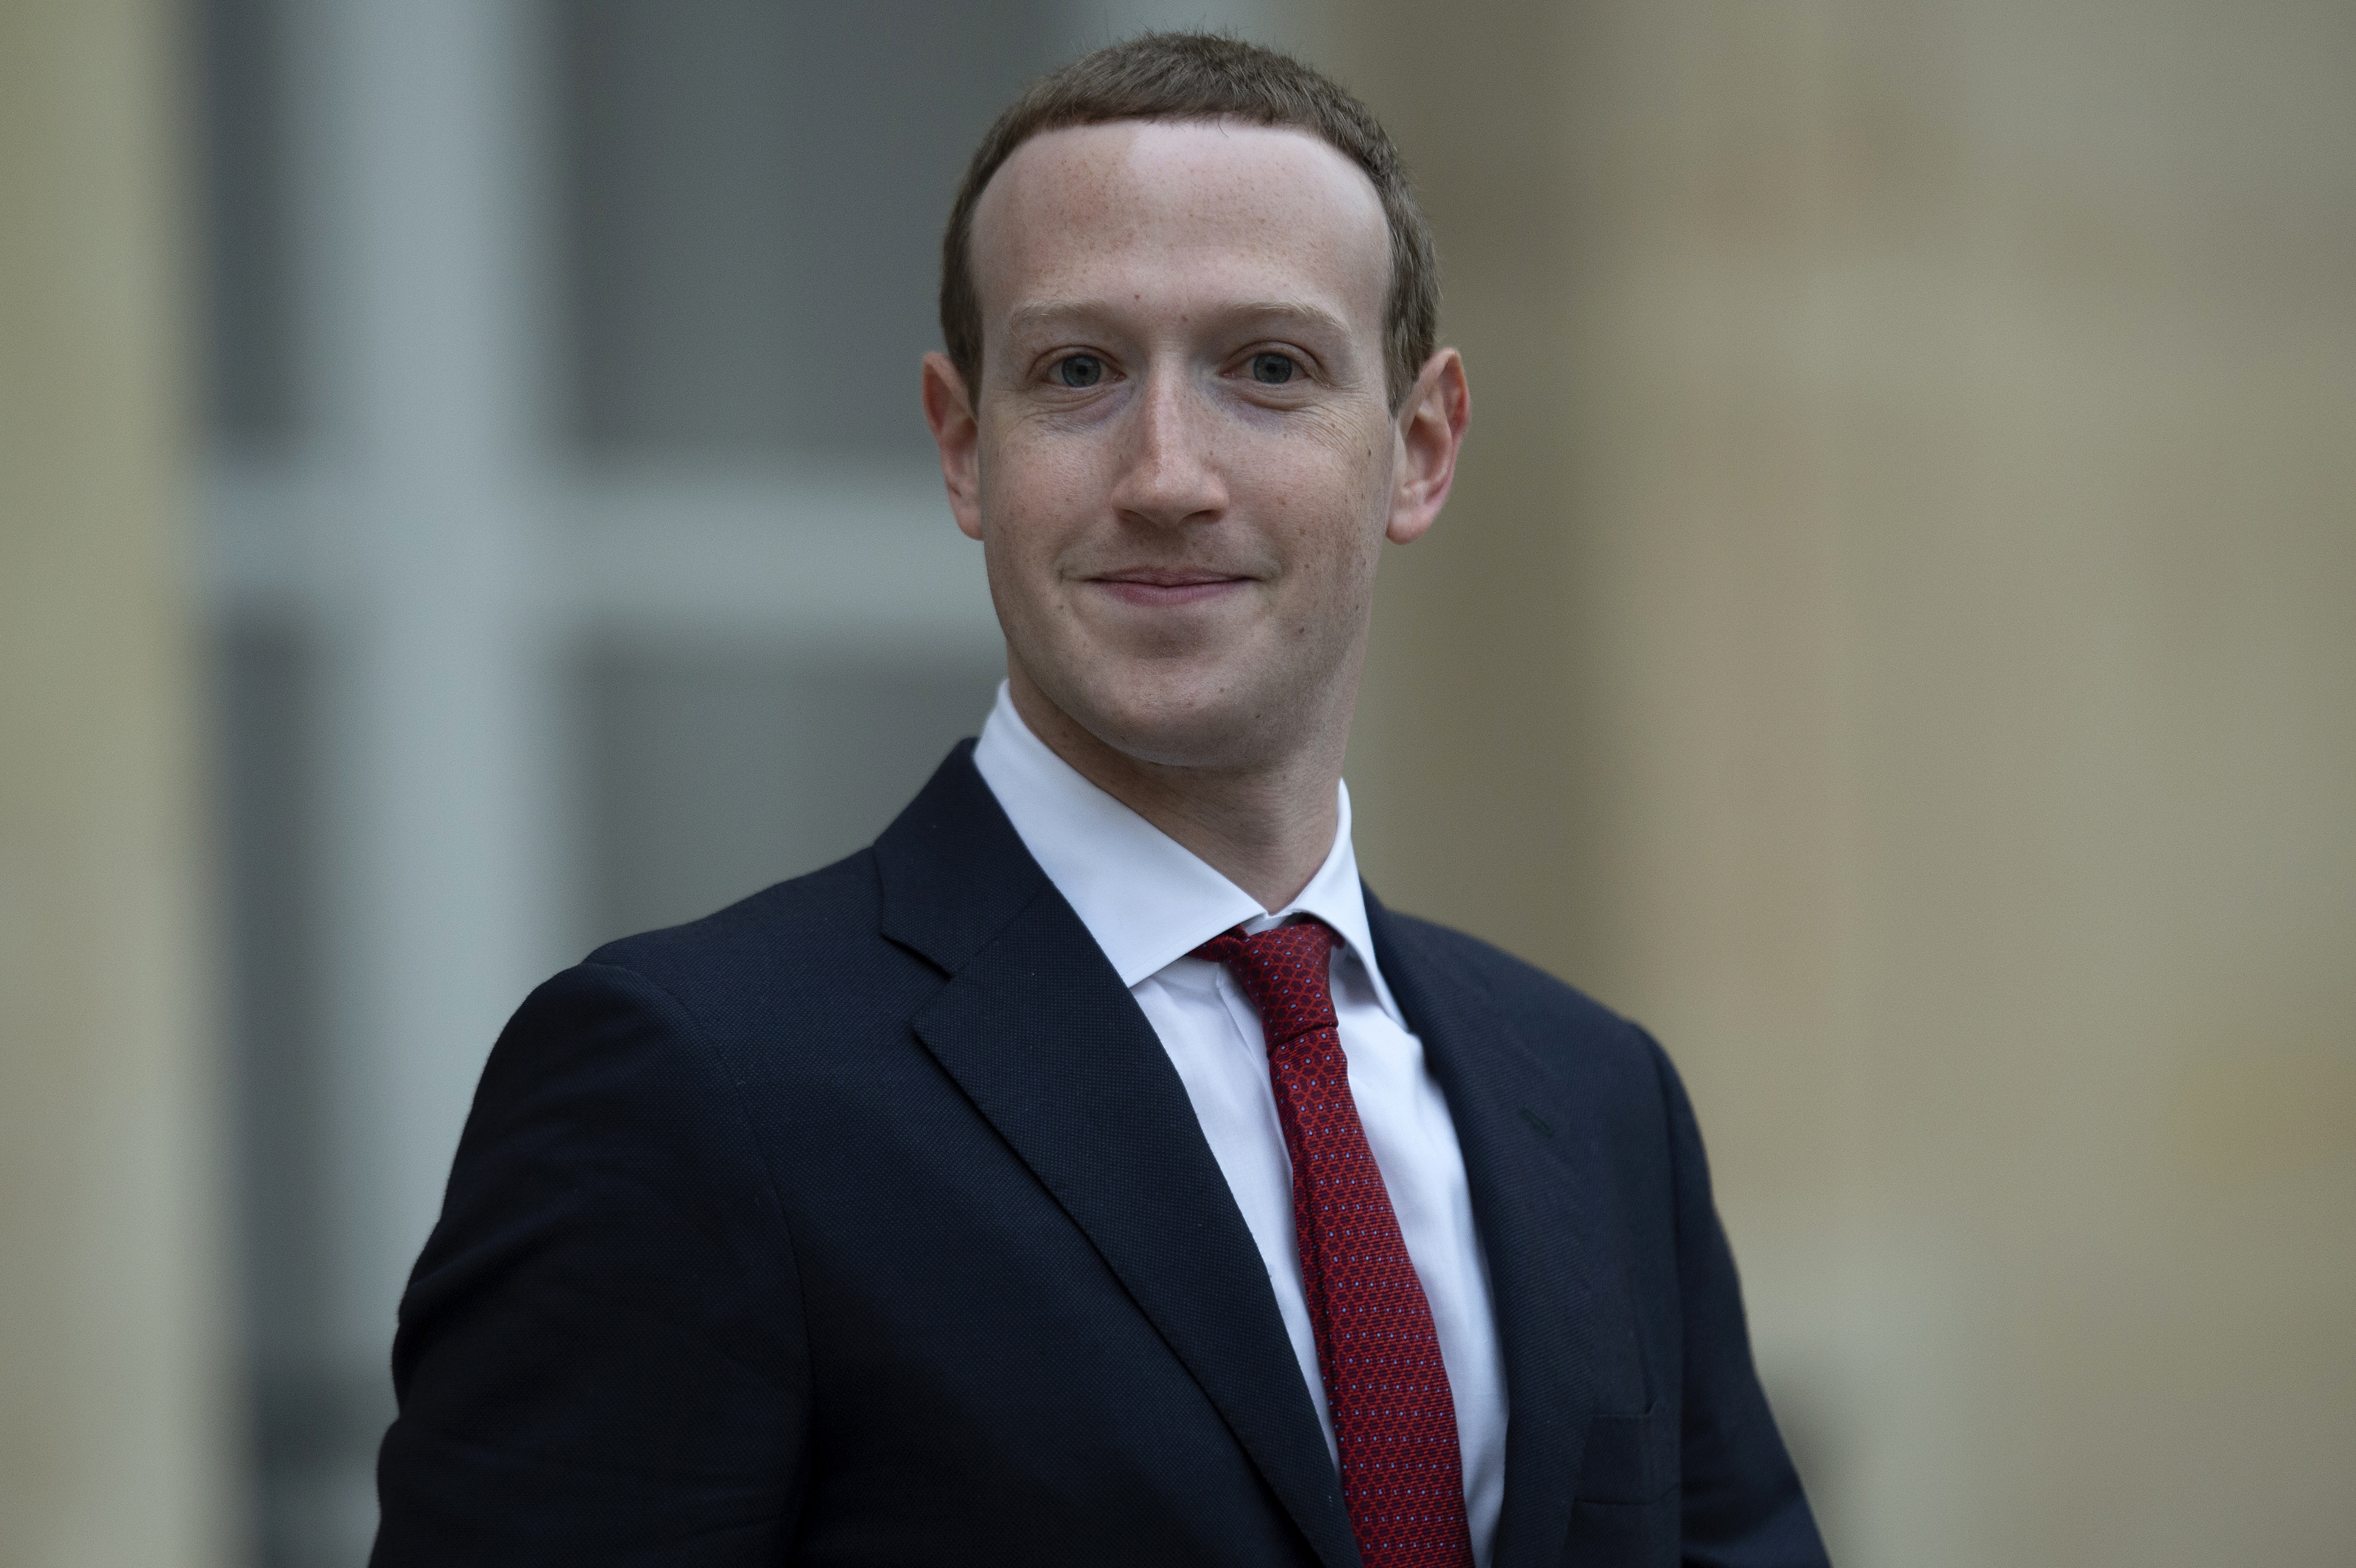 Mark zuckerberg